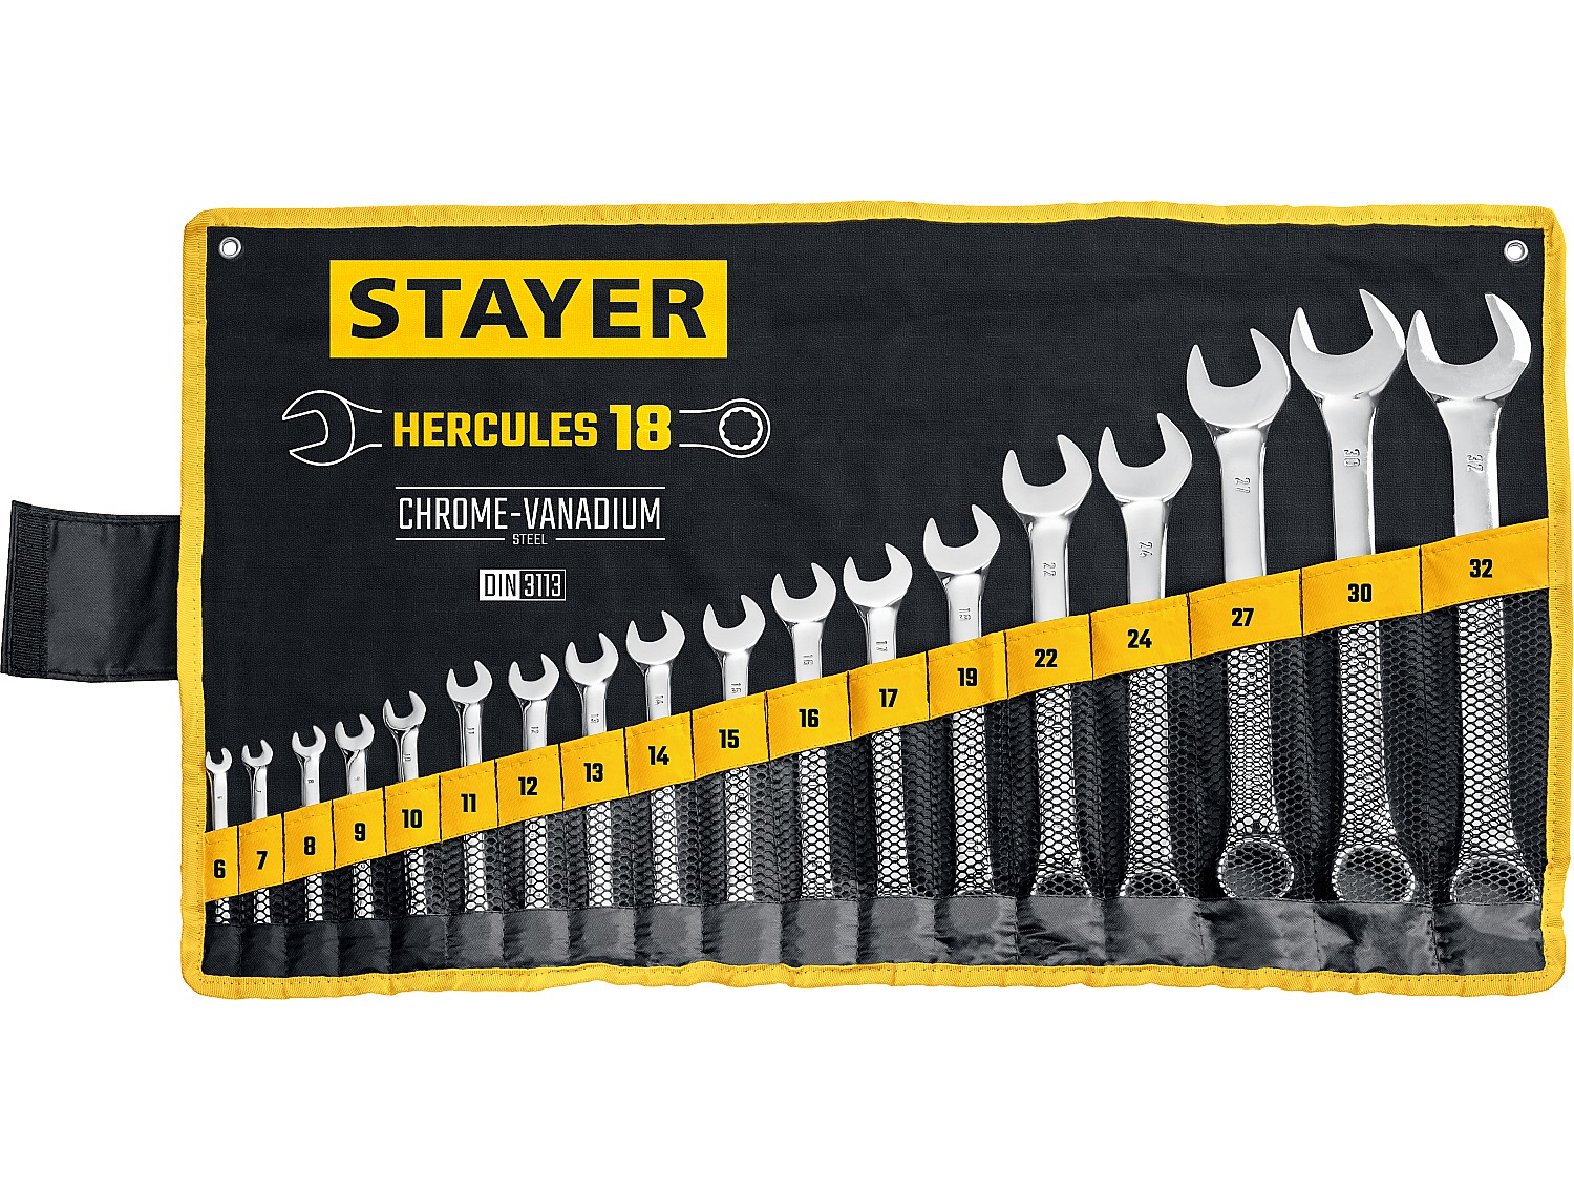     STAYER HERCULES 18  6-32  (27081-H18_z01)